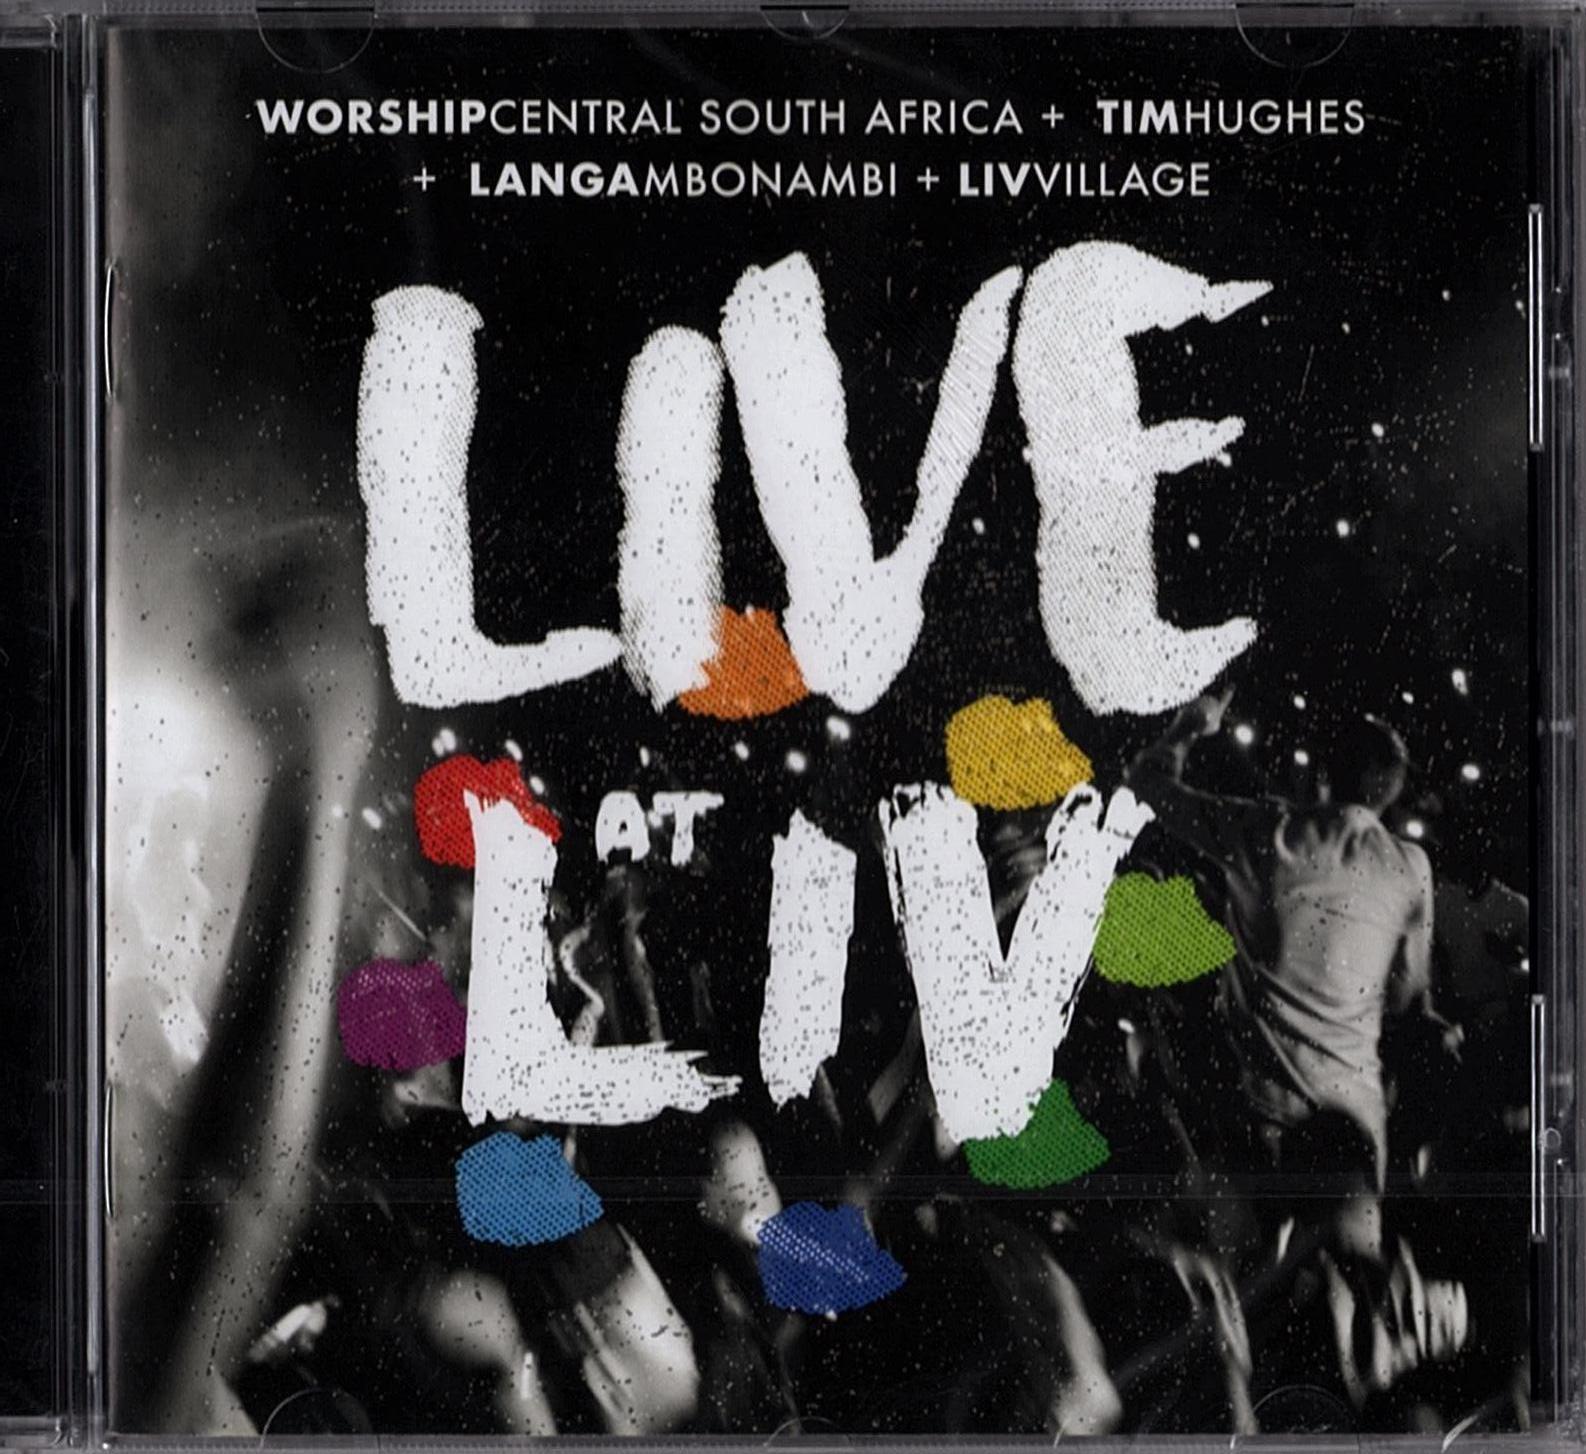 More information on Live at LIV Worship Central